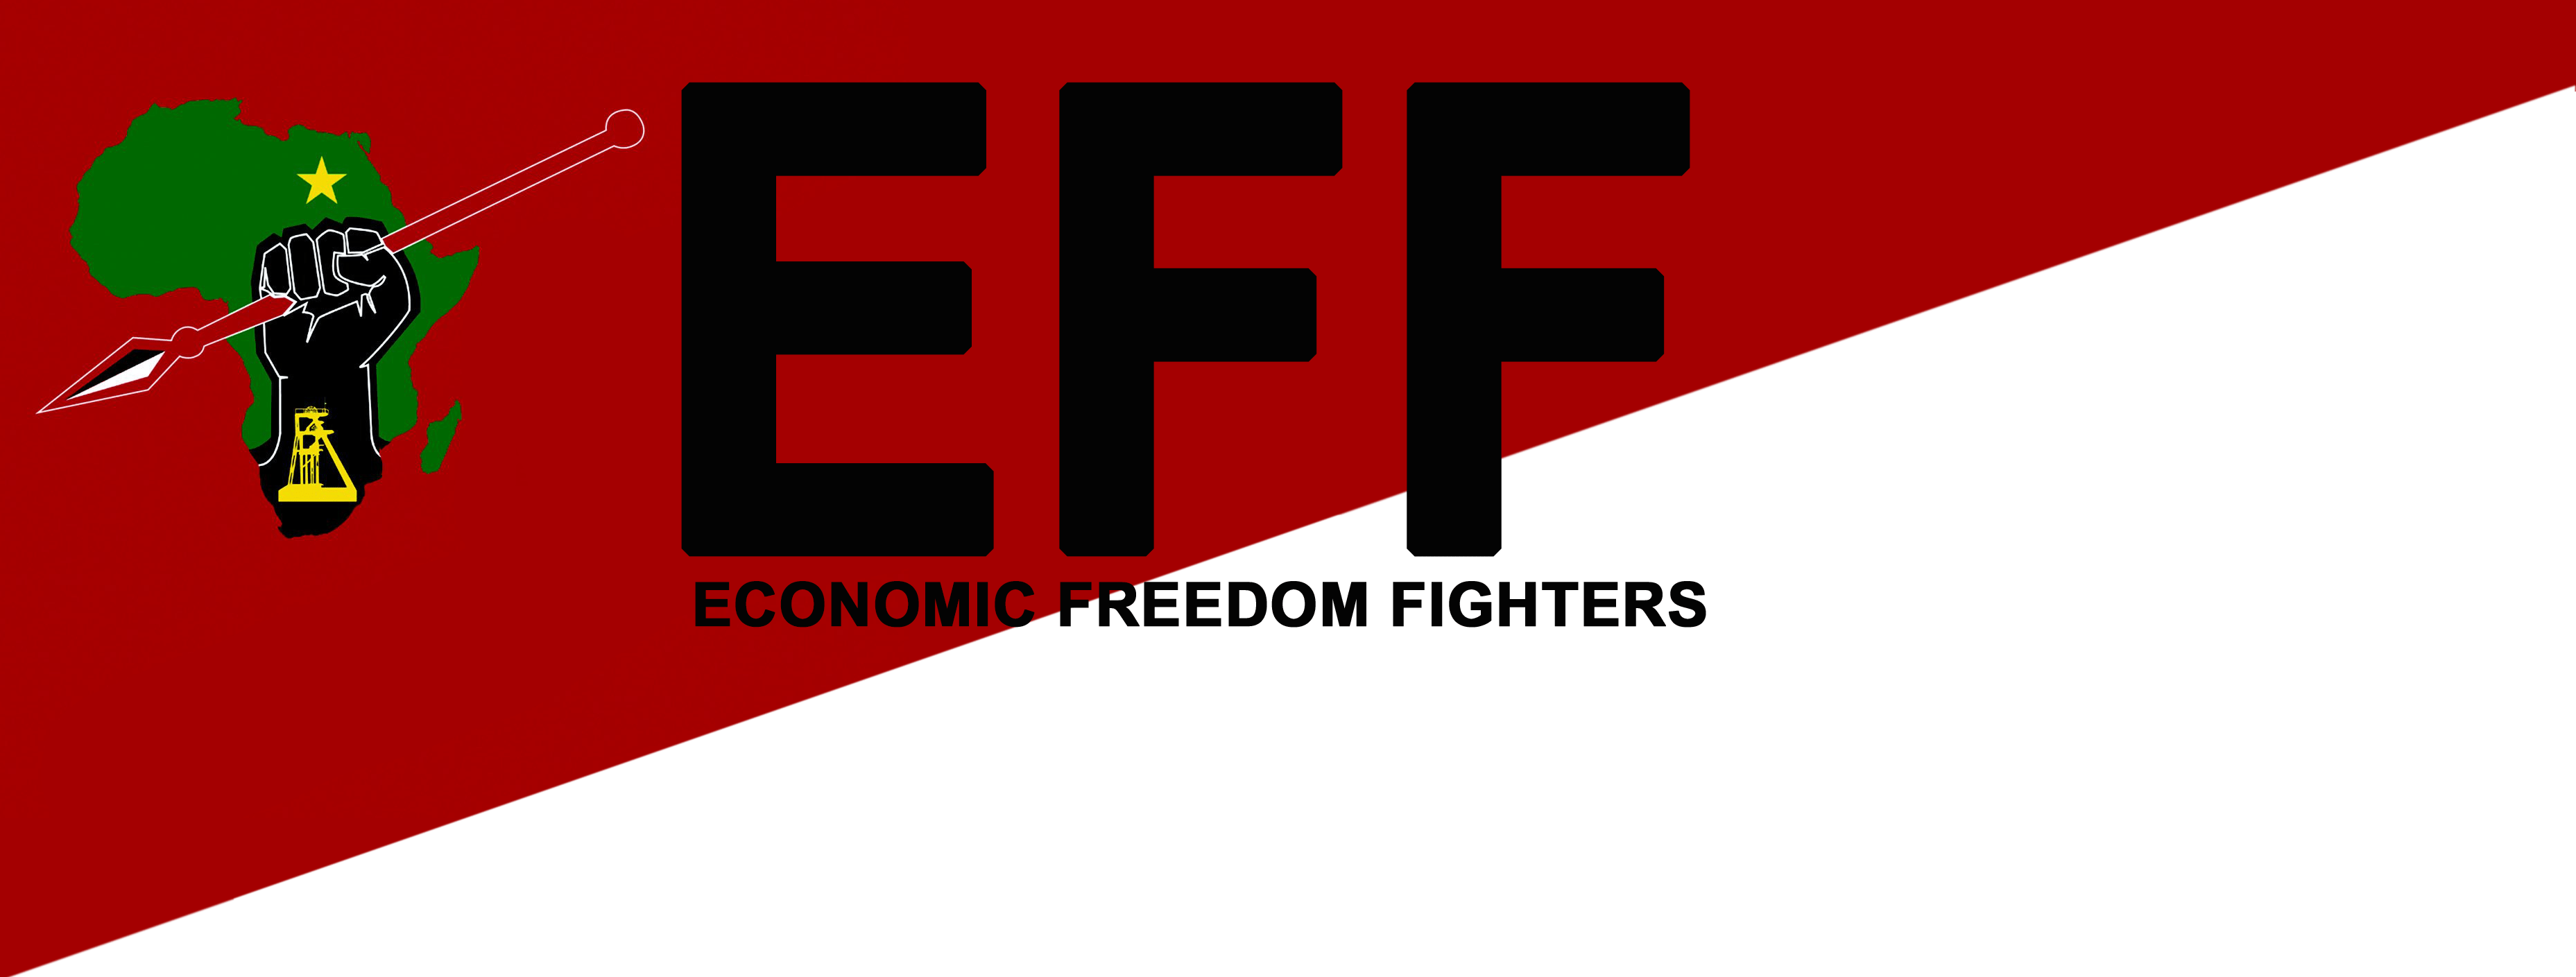 Eff Logo - EFF LOGO PAGE. Economic Freedom Fighters